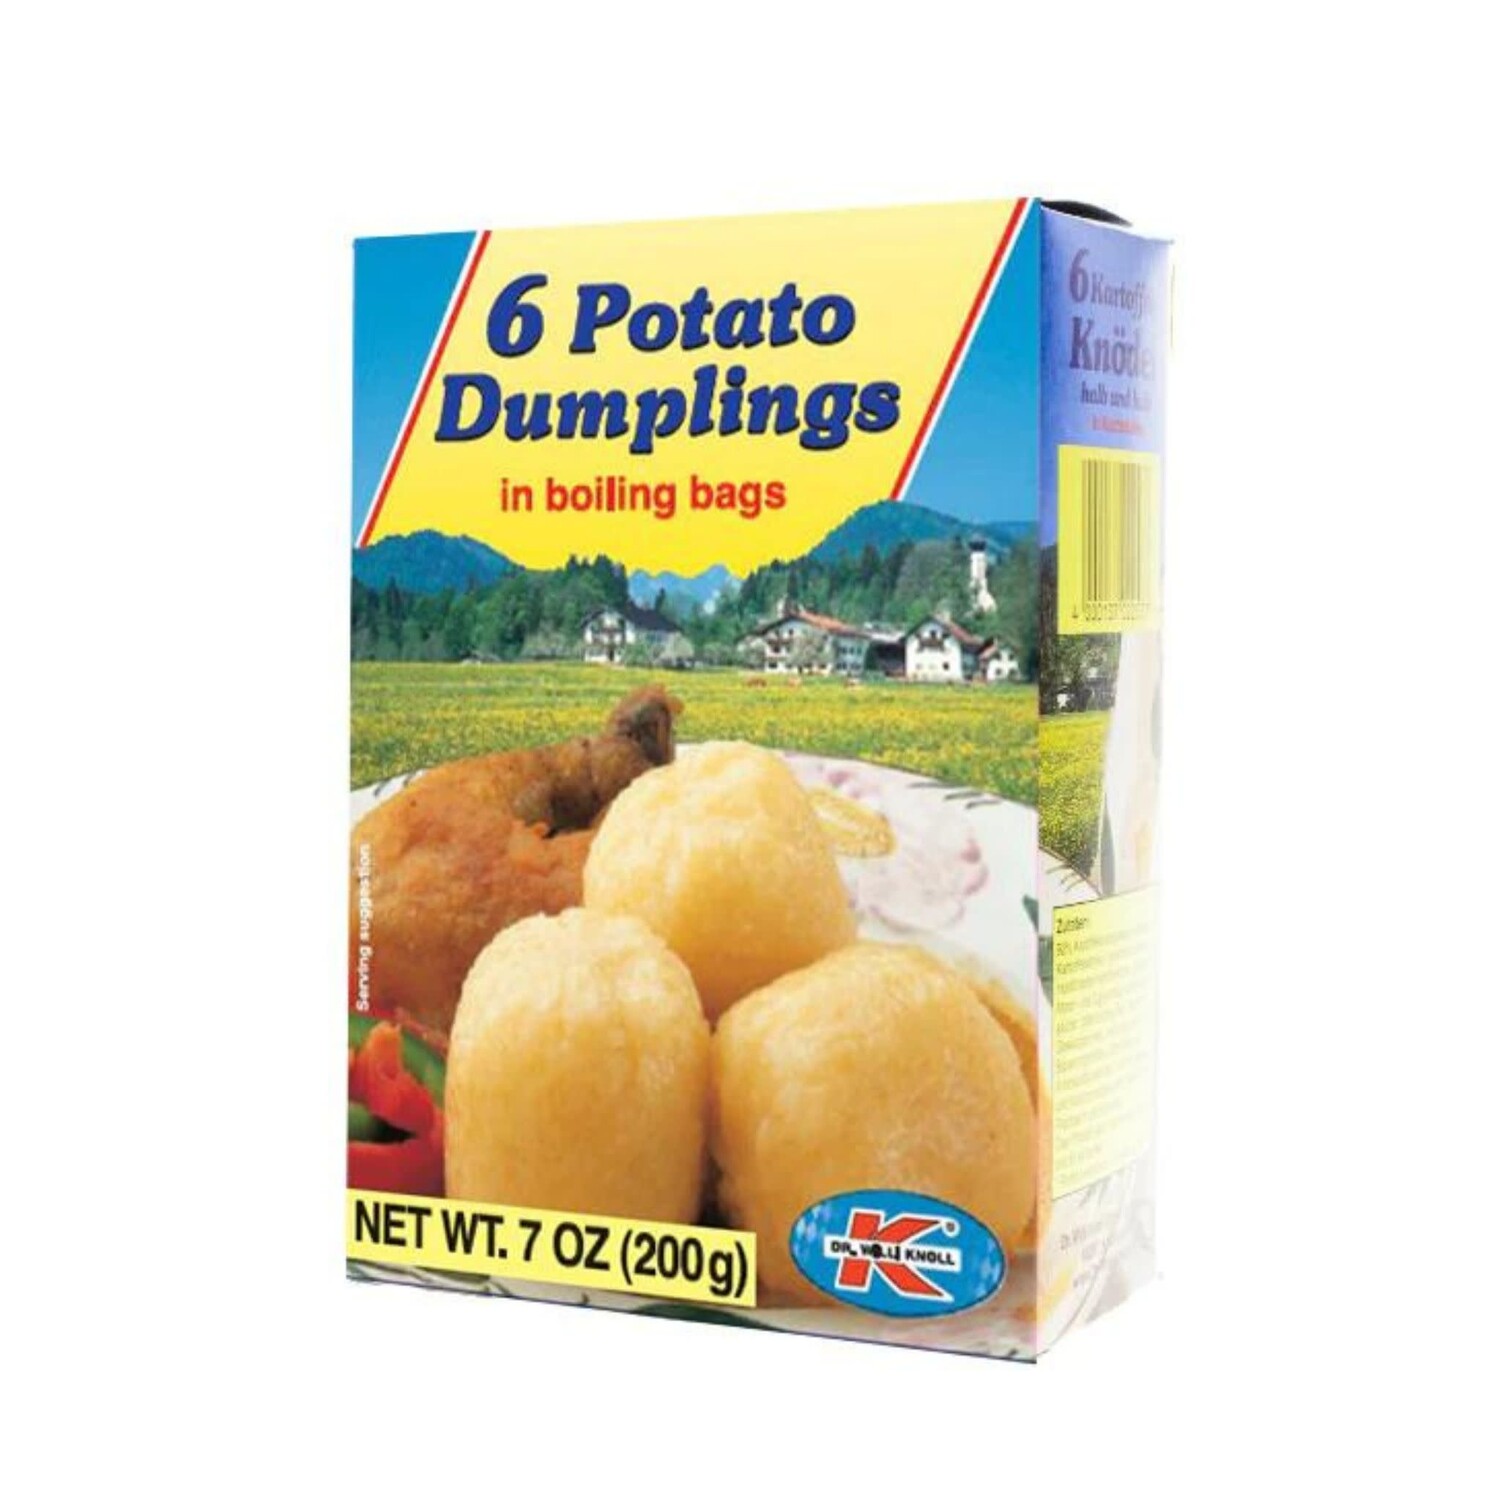 https://cdn.shoplightspeed.com/shops/618750/files/55075119/1500x1500x2/dr-willi-knoll-6-potato-dumplings-halb-halb-in-boi.jpg